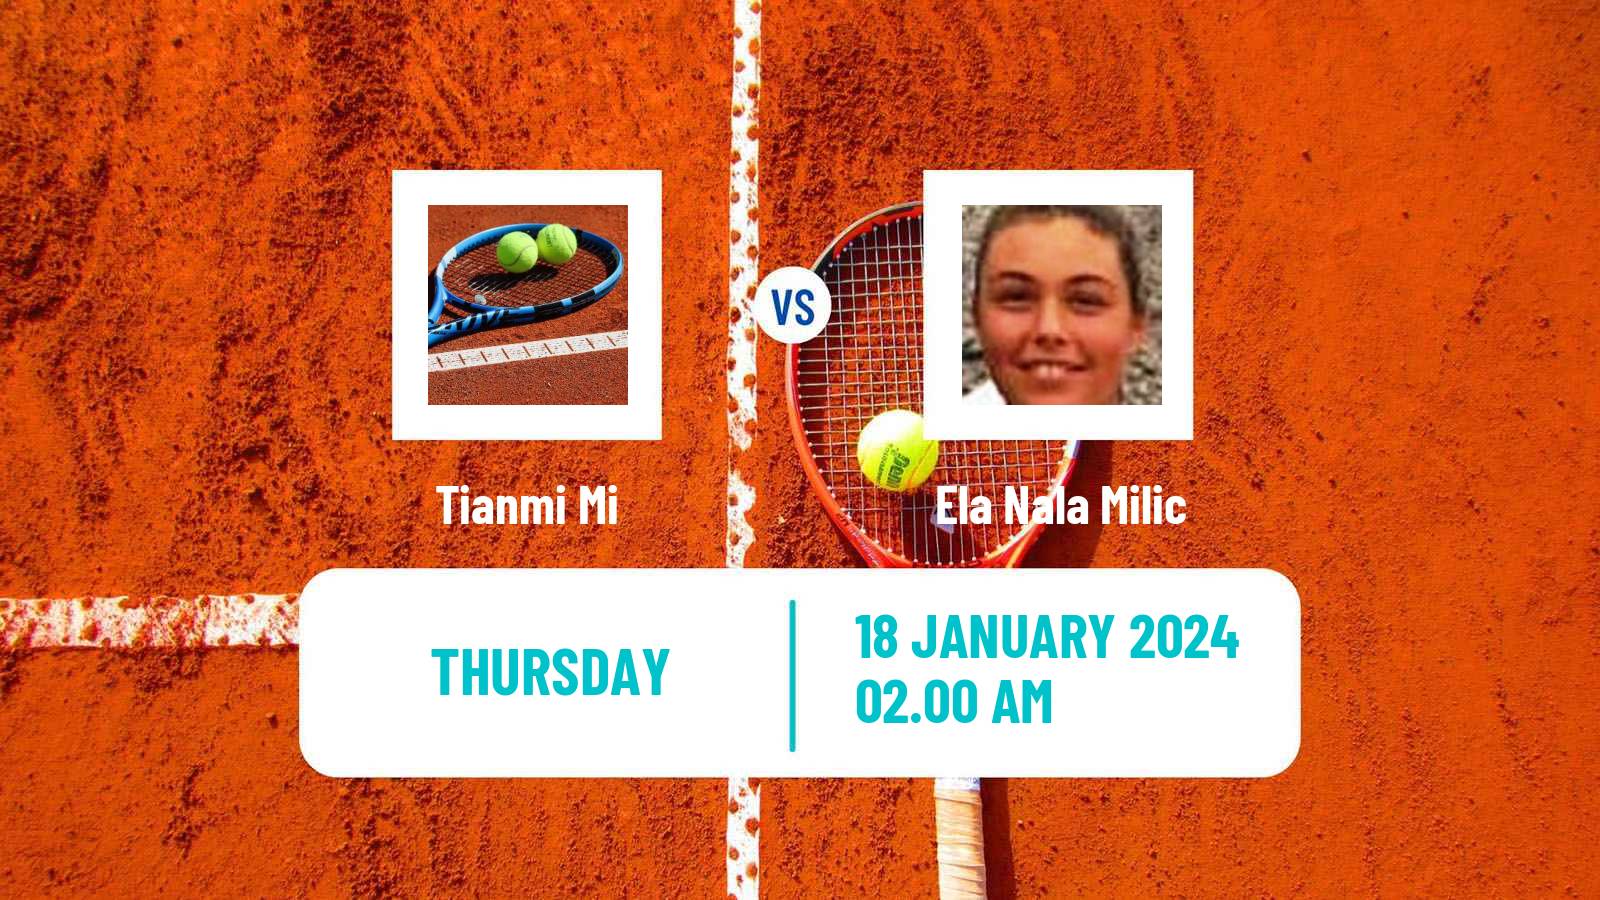 Tennis ITF W50 Antalya Women Tianmi Mi - Ela Nala Milic